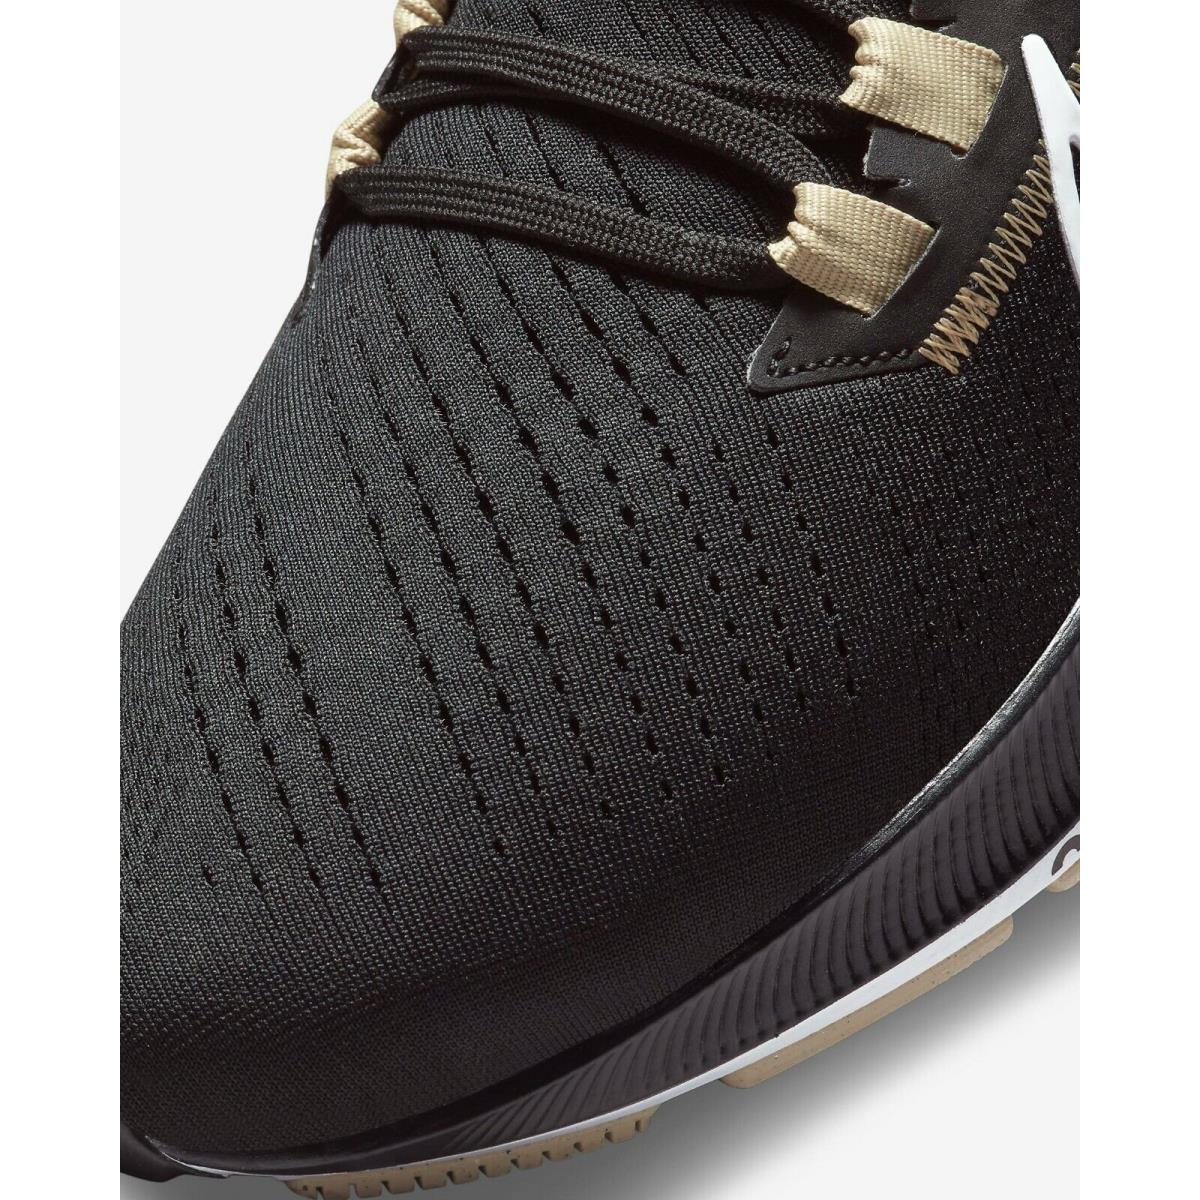 Nike shoes Air Zoom Pegasus - Black 4